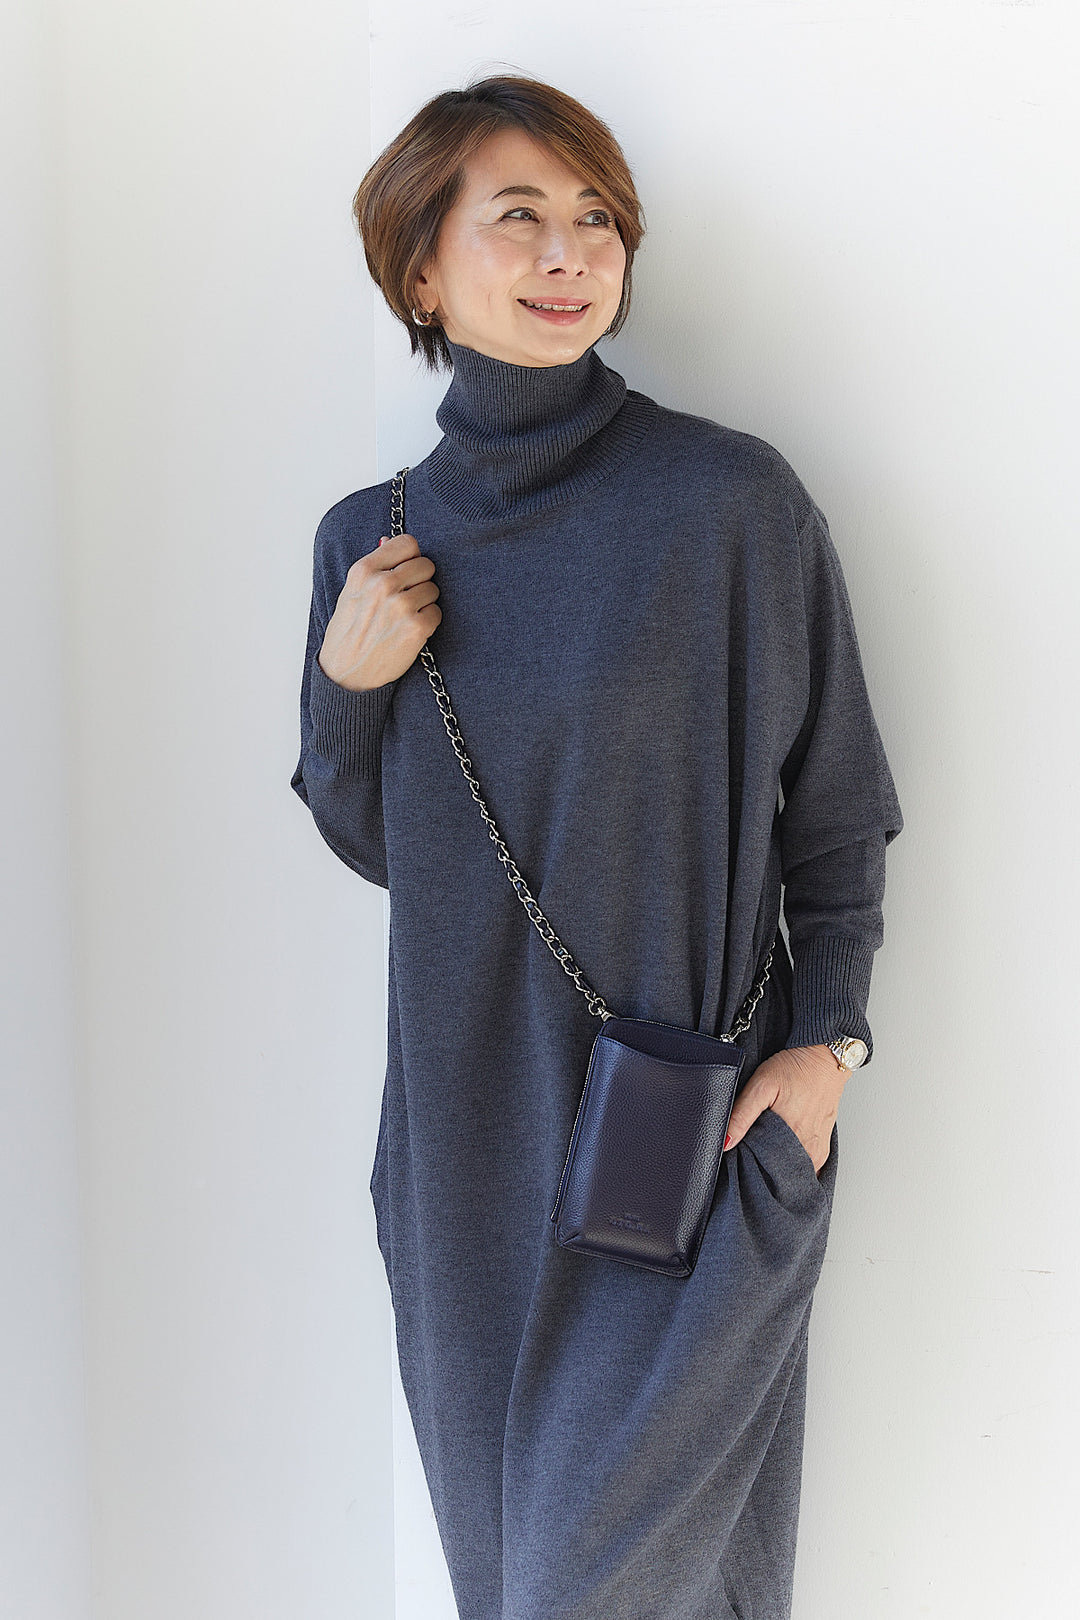 100% cowhide hands-free bag silverchainstrap × Kazuko Kondo collaboration 